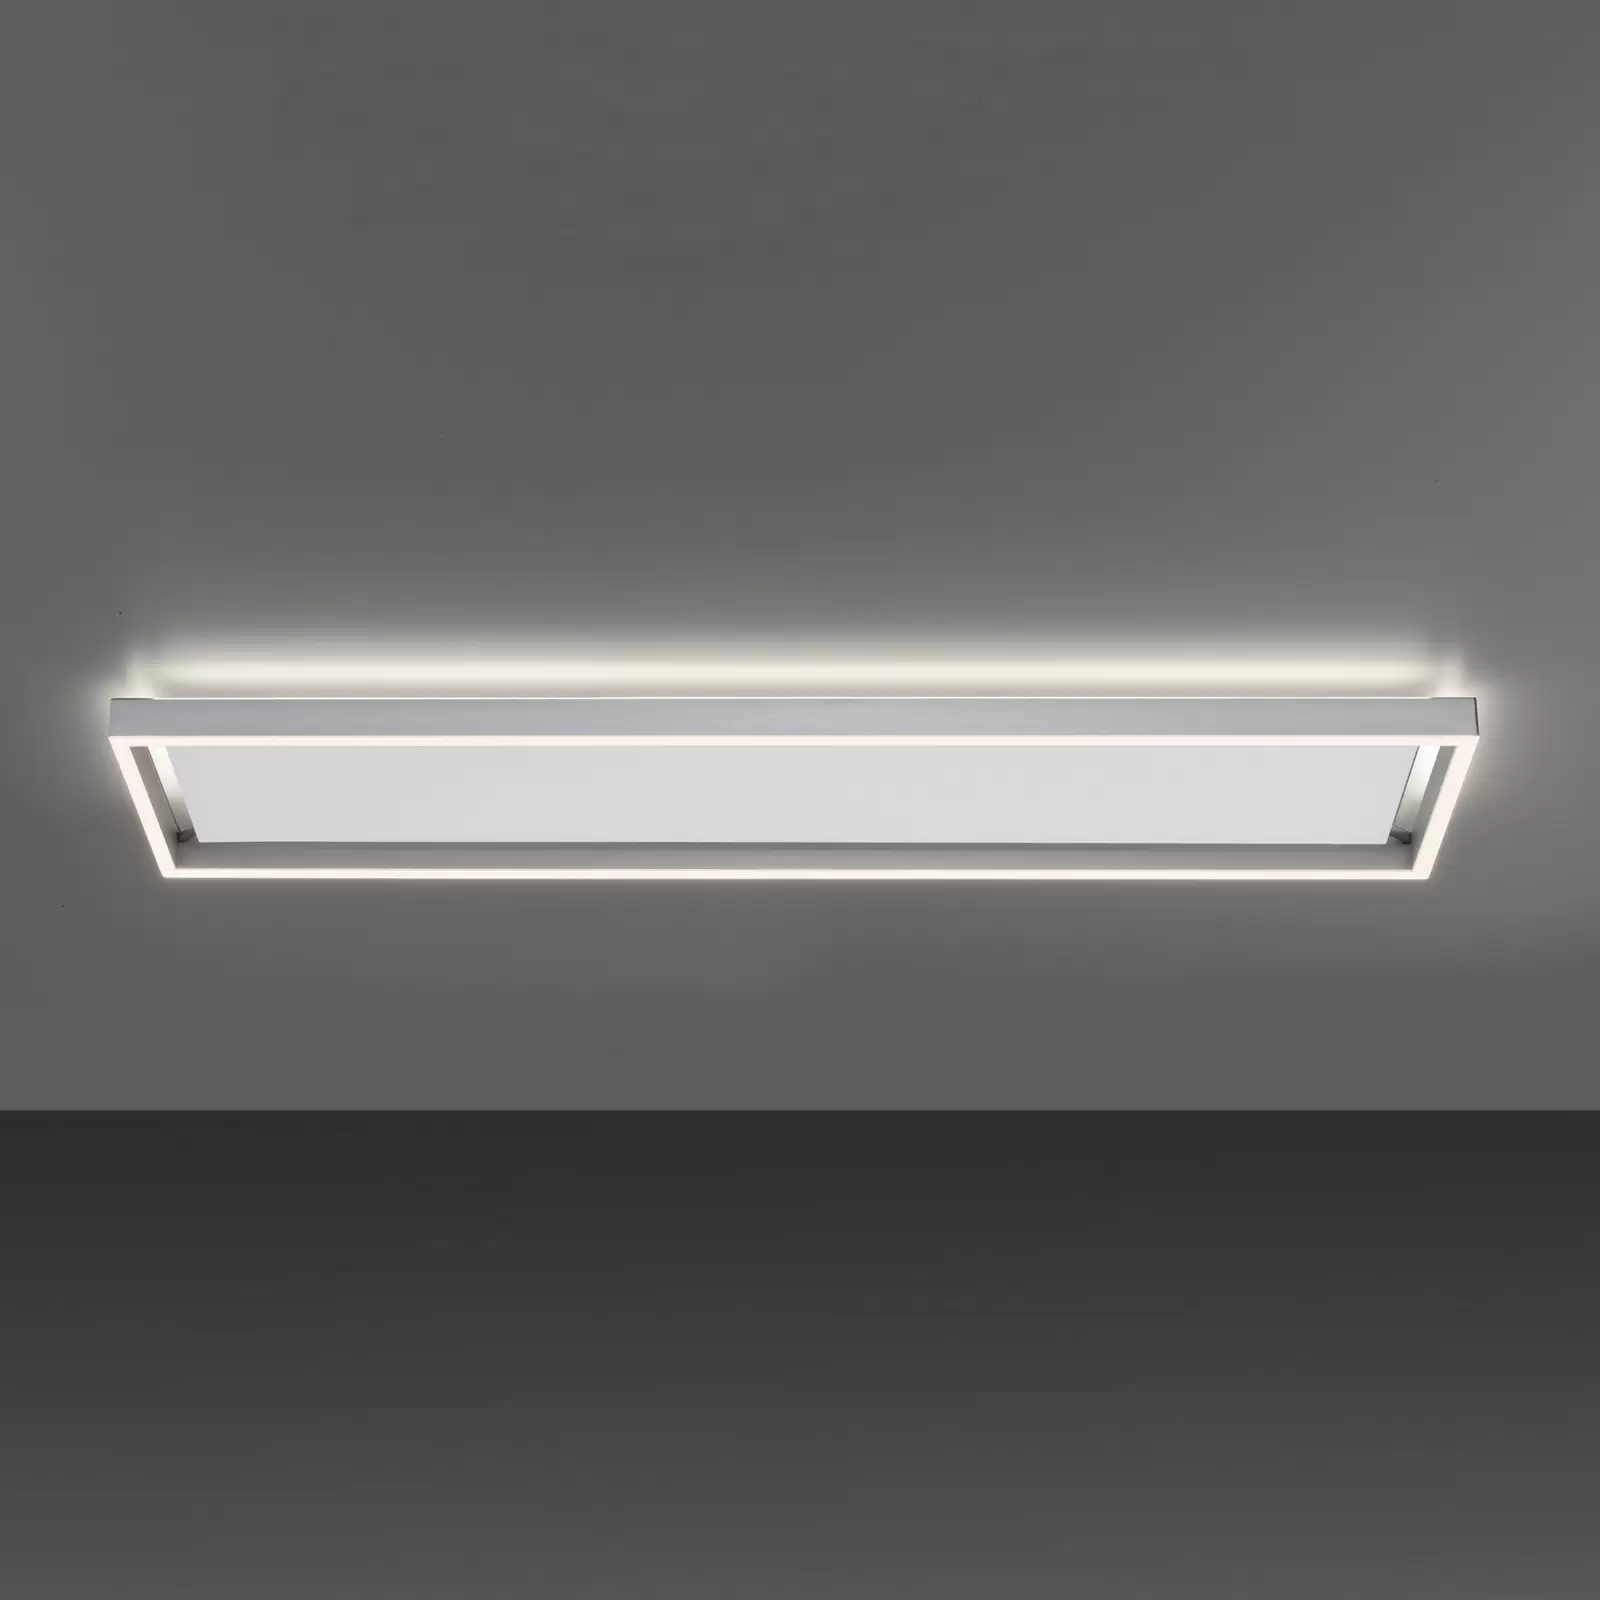 Lámpara de Techo Regulable, 100x25cm Panel LED con Control Remoto